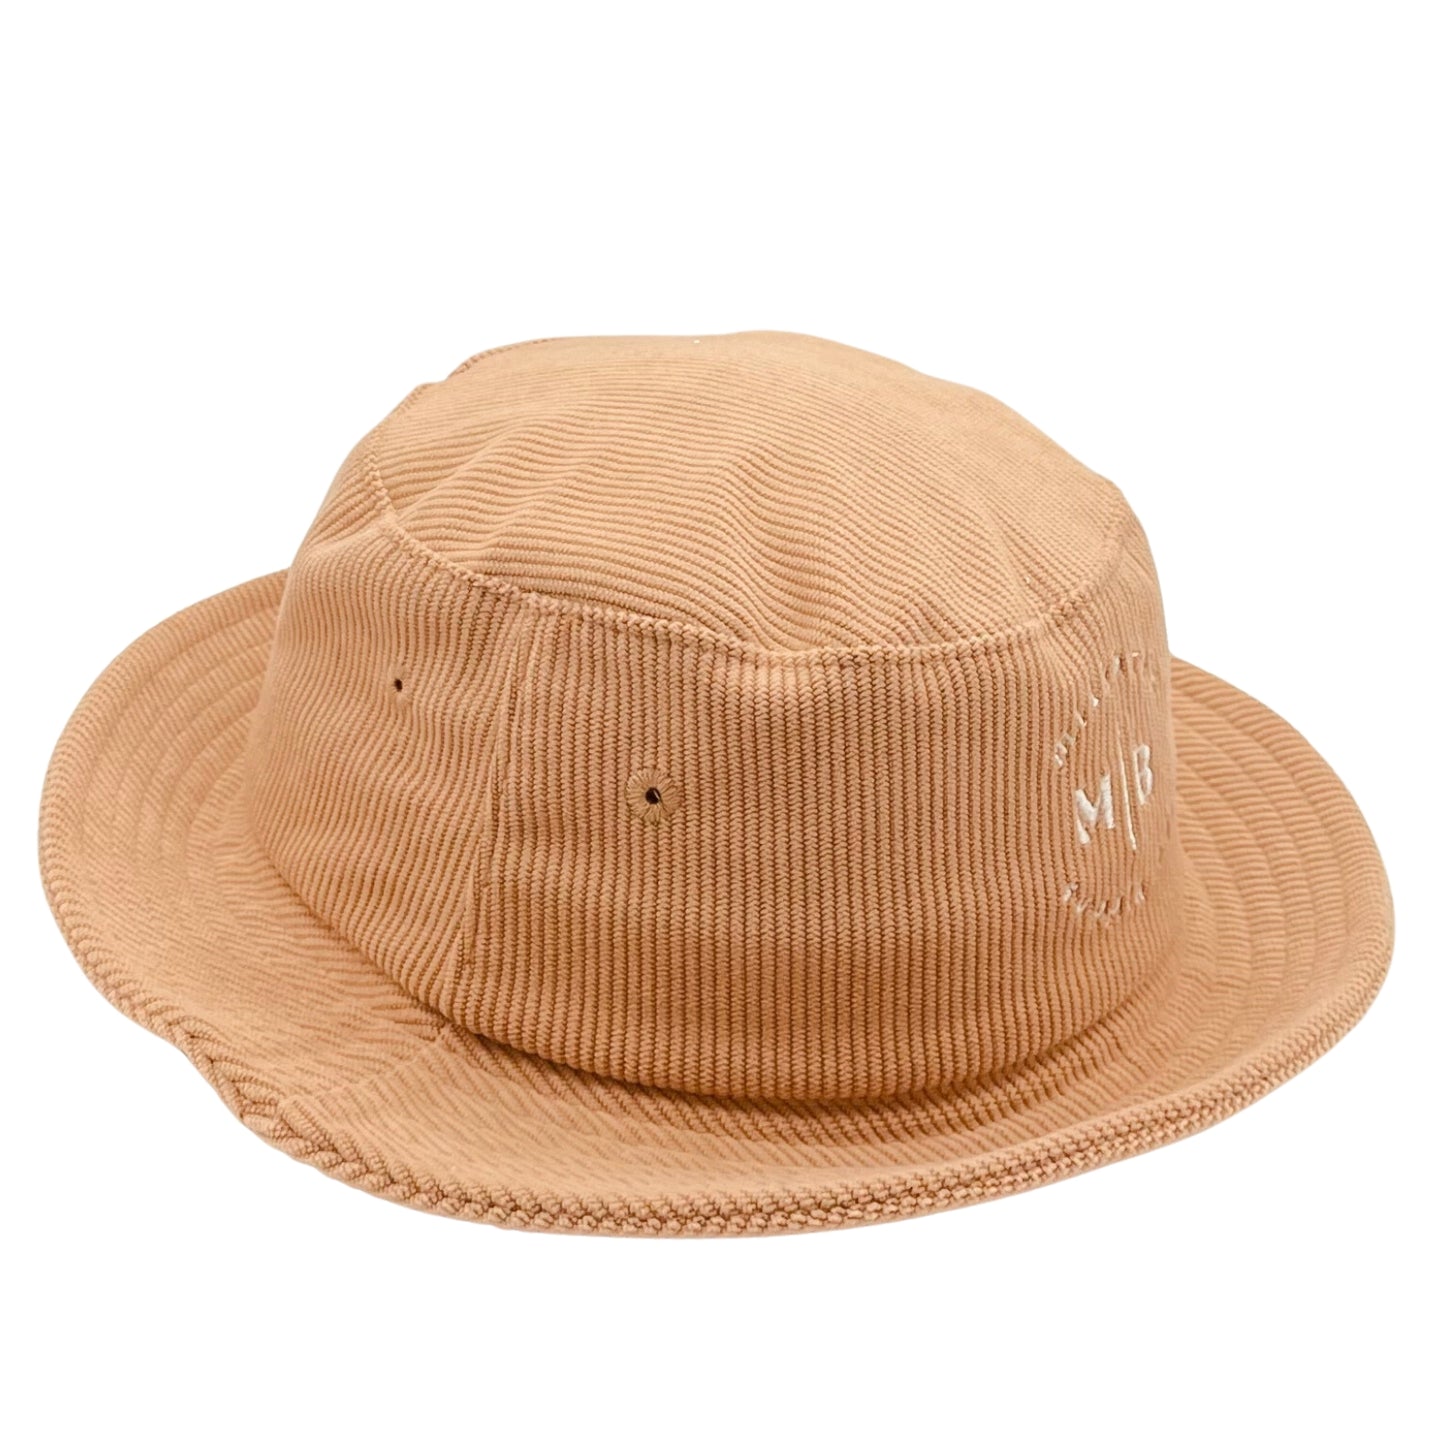 The Hustler Corduroy Bucket Hat